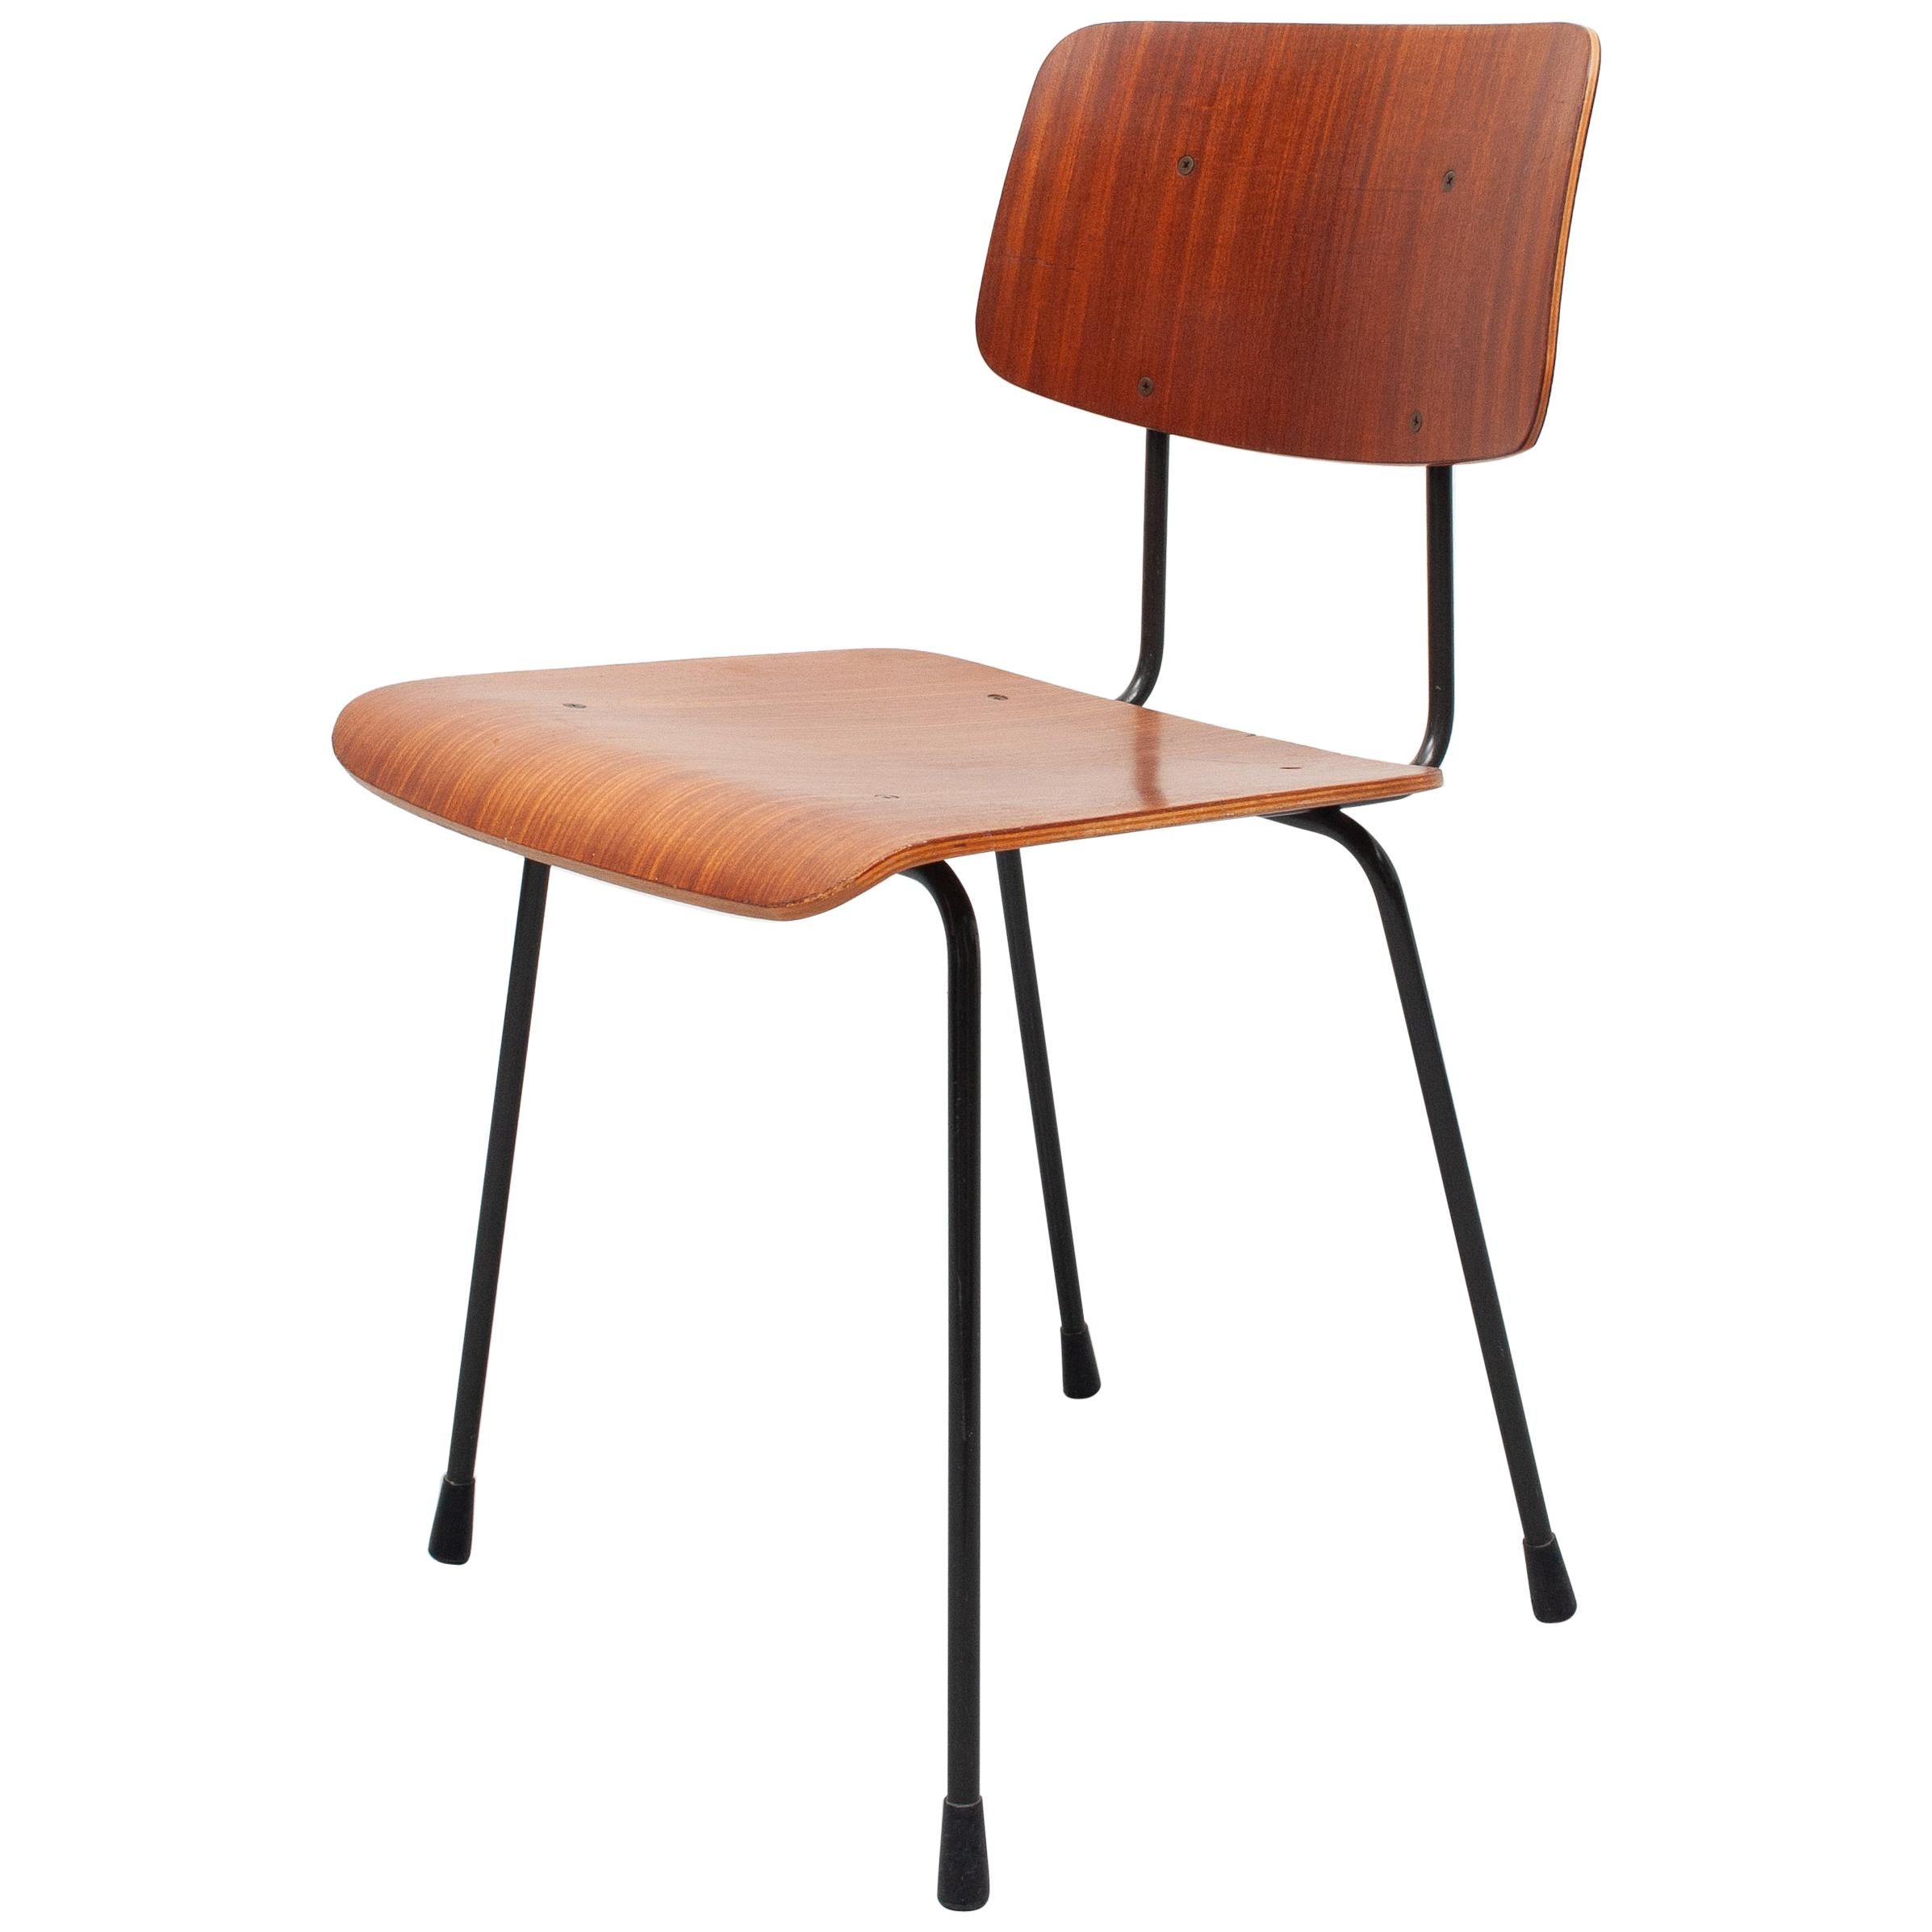 Teak Curved Plywood Chair Gispen Model 1262, 1950s, Holland